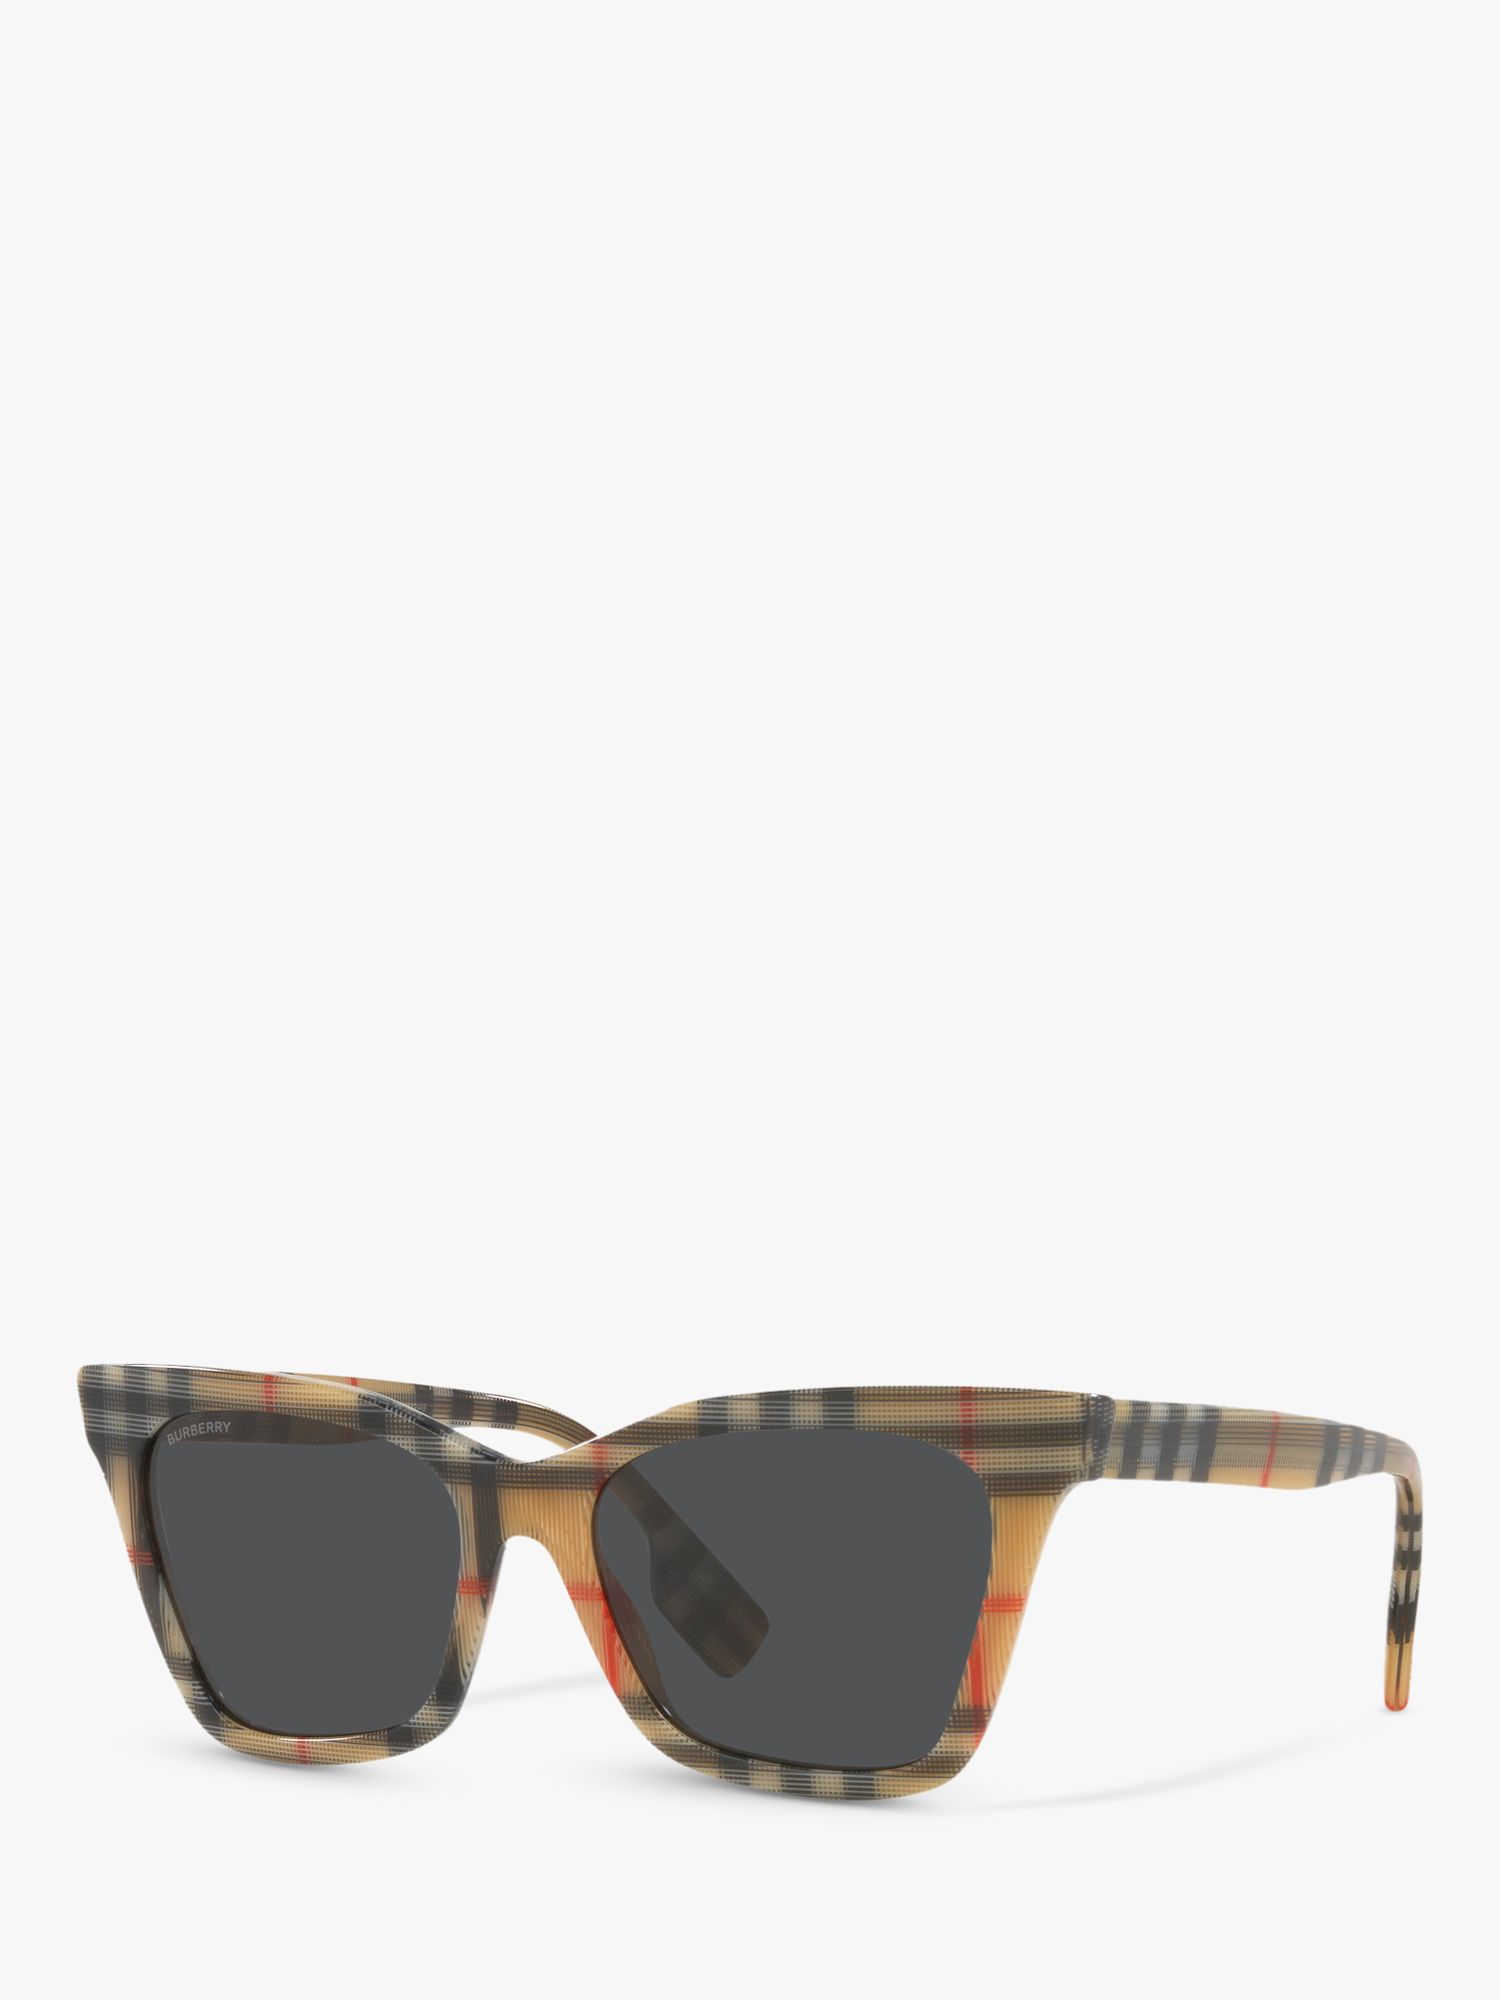 Burberry BE4346 Women's Irregular Sunglasses, Vintage Check/Grey at